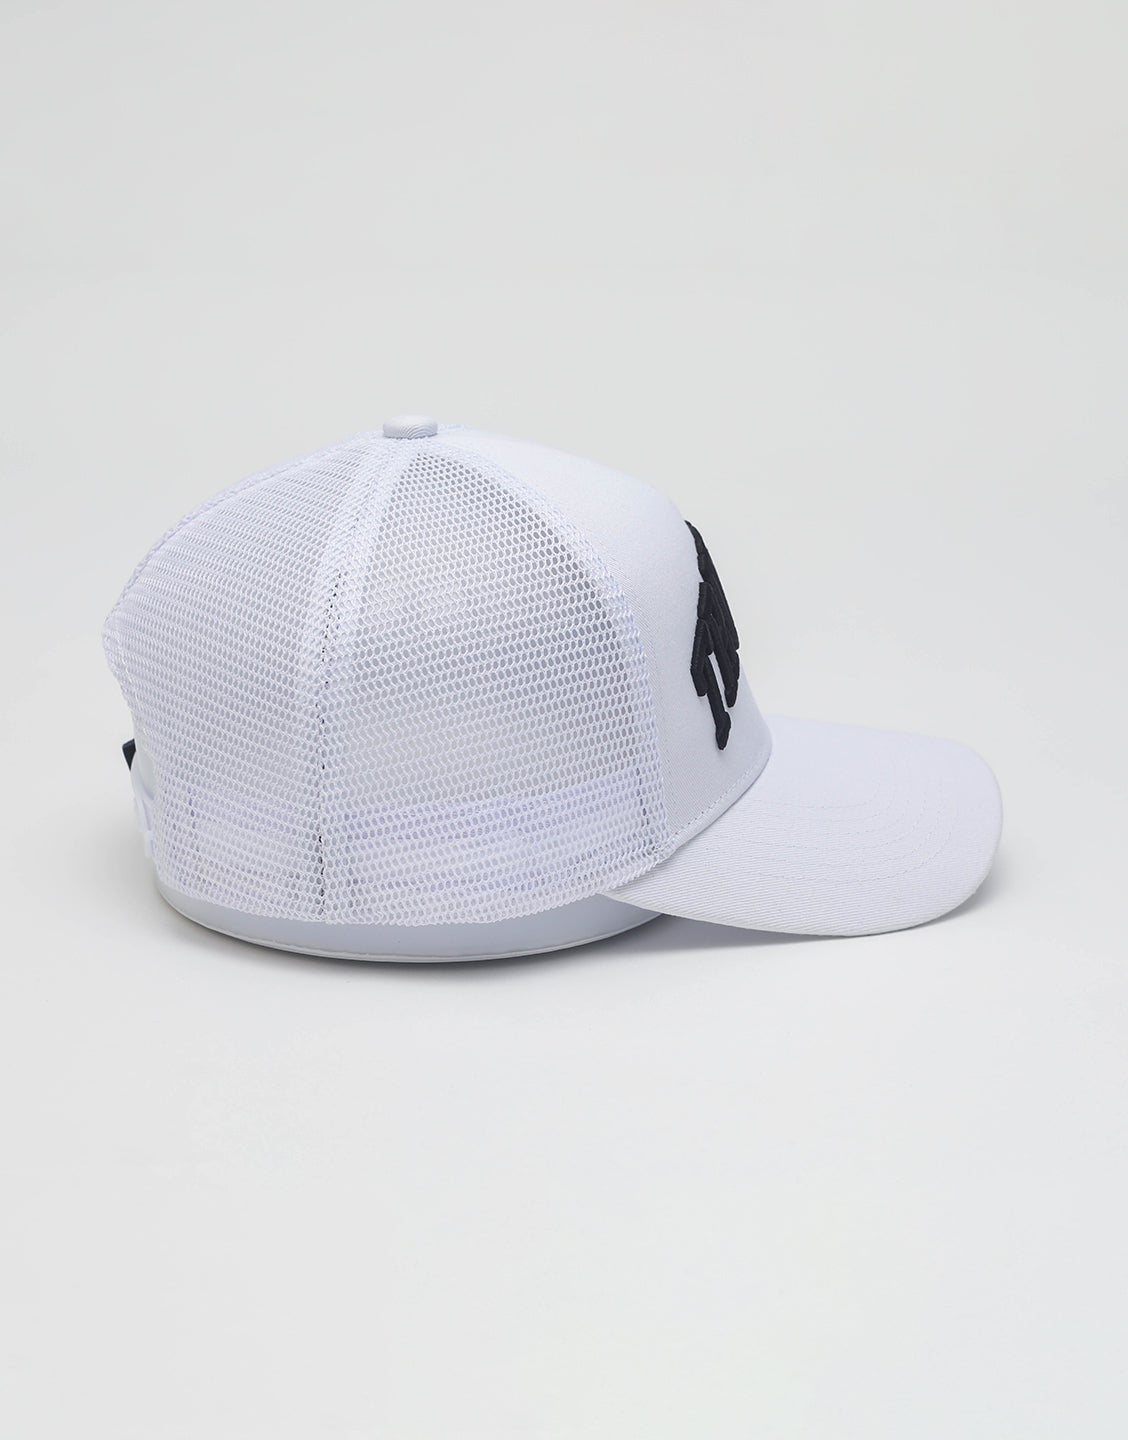 Trust God Premium Trucker Hat - White - VOTC Clothing